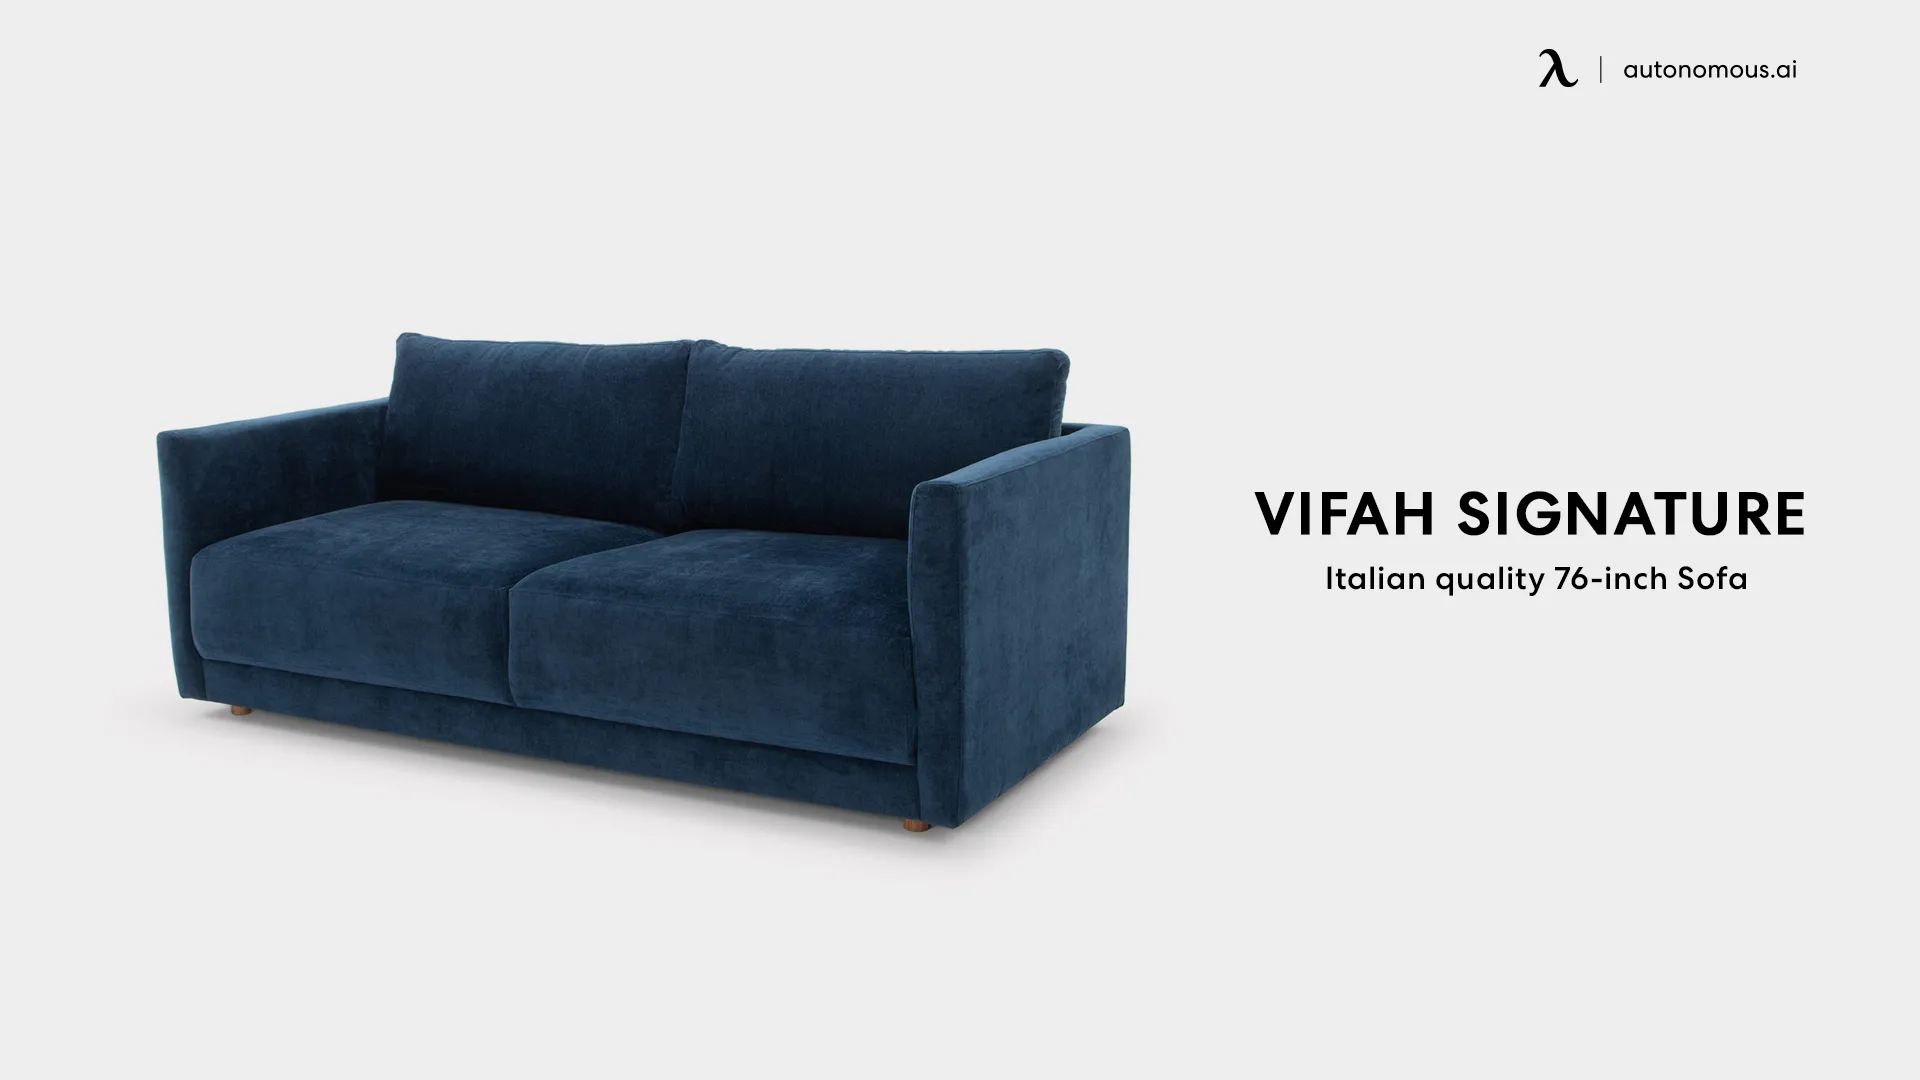 DVG VIFAH SIGNATURE Italian quality 76-inch Mid-century design